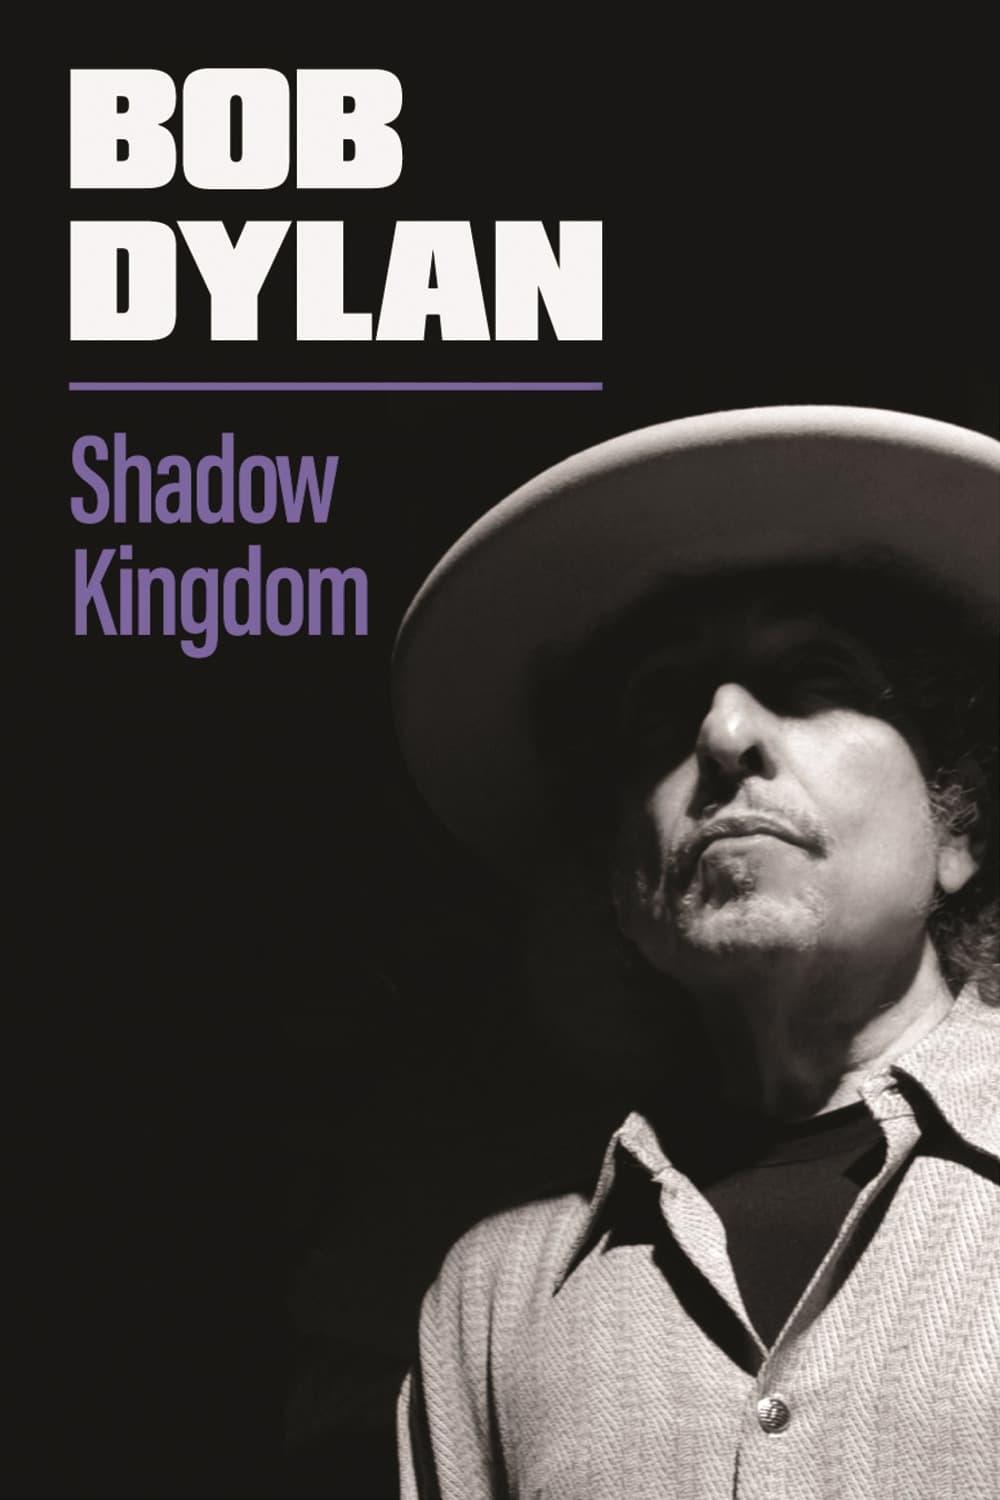 Bob Dylan: Shadow Kingdom poster